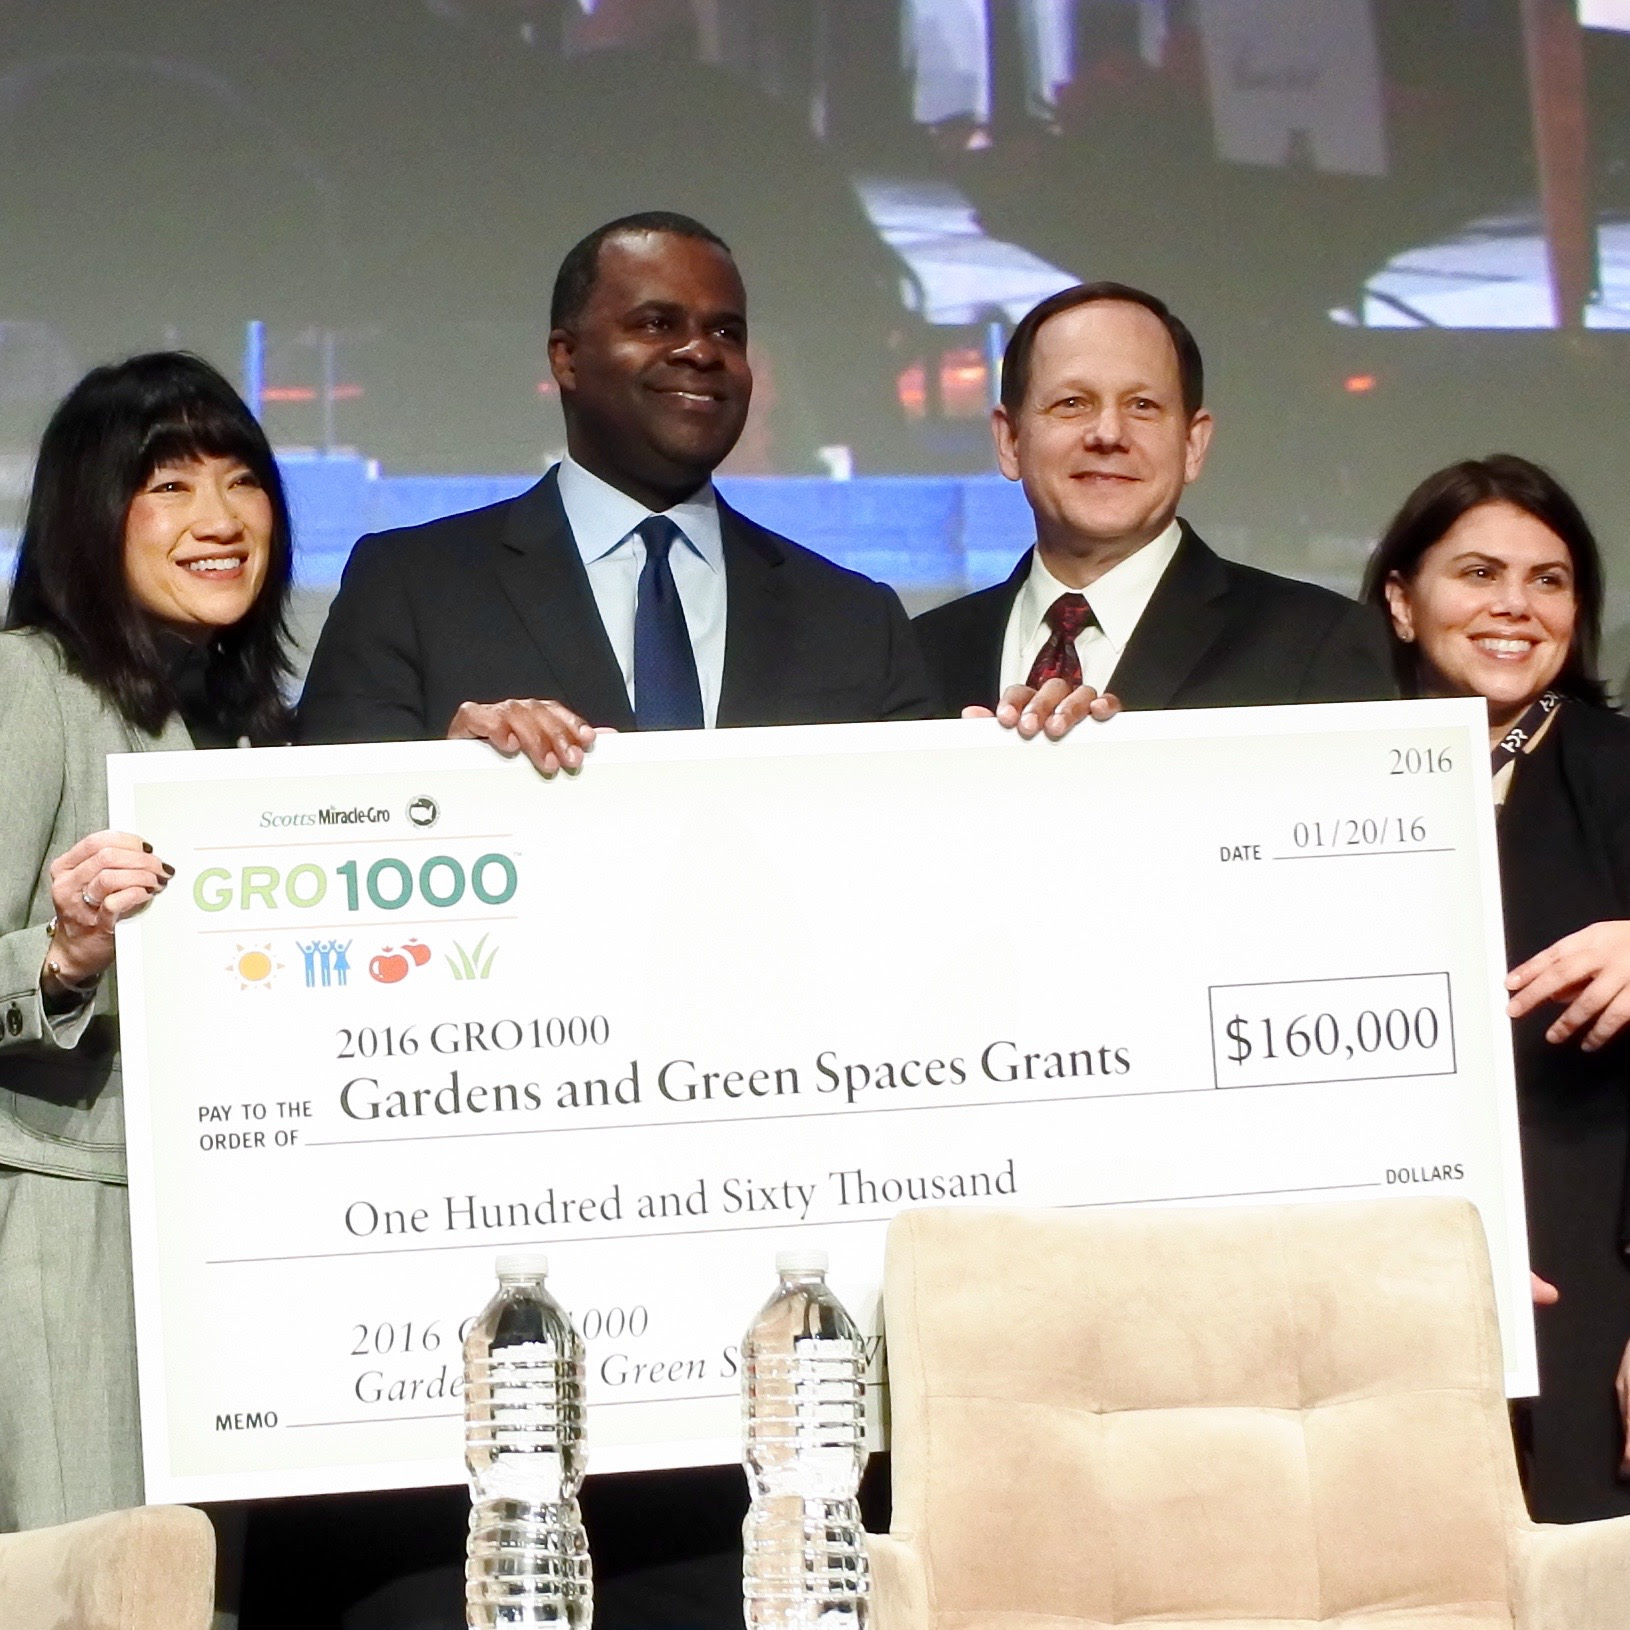 Mayor Slay receives the GRO1000 Gardens and Greenspaces national award